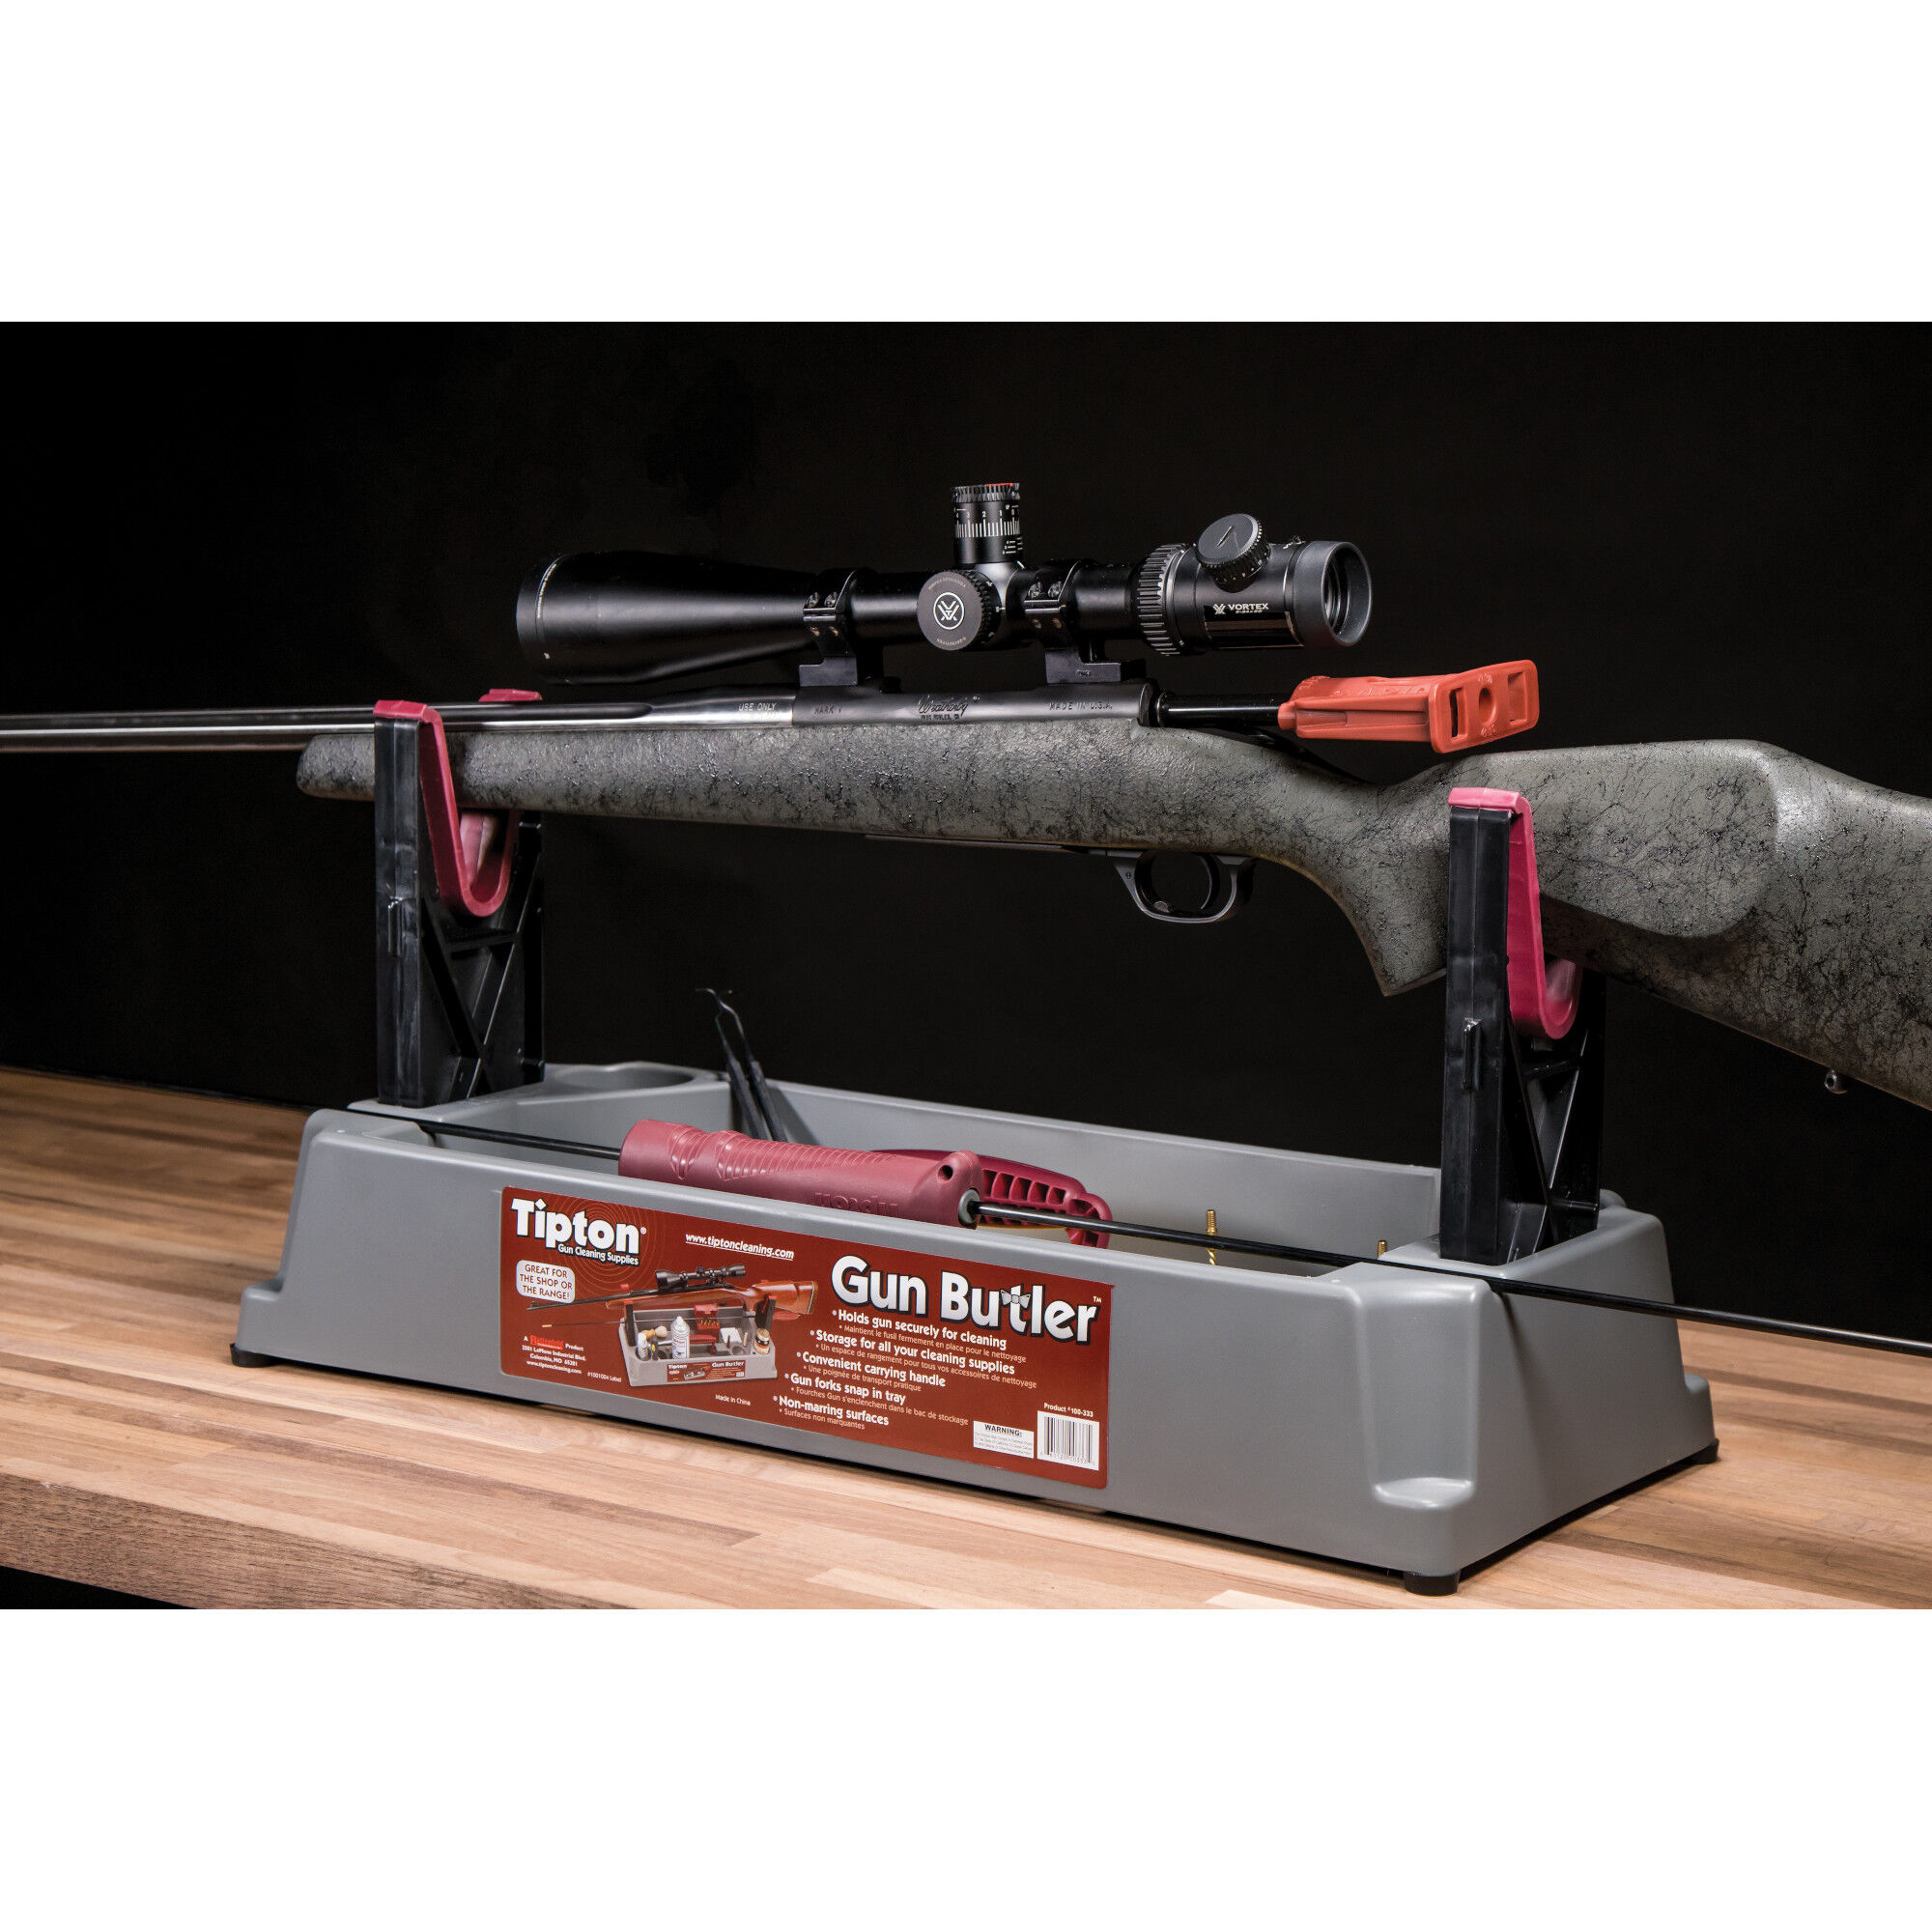 Tipton Gs60922 Gun Butler 100333 for sale online 